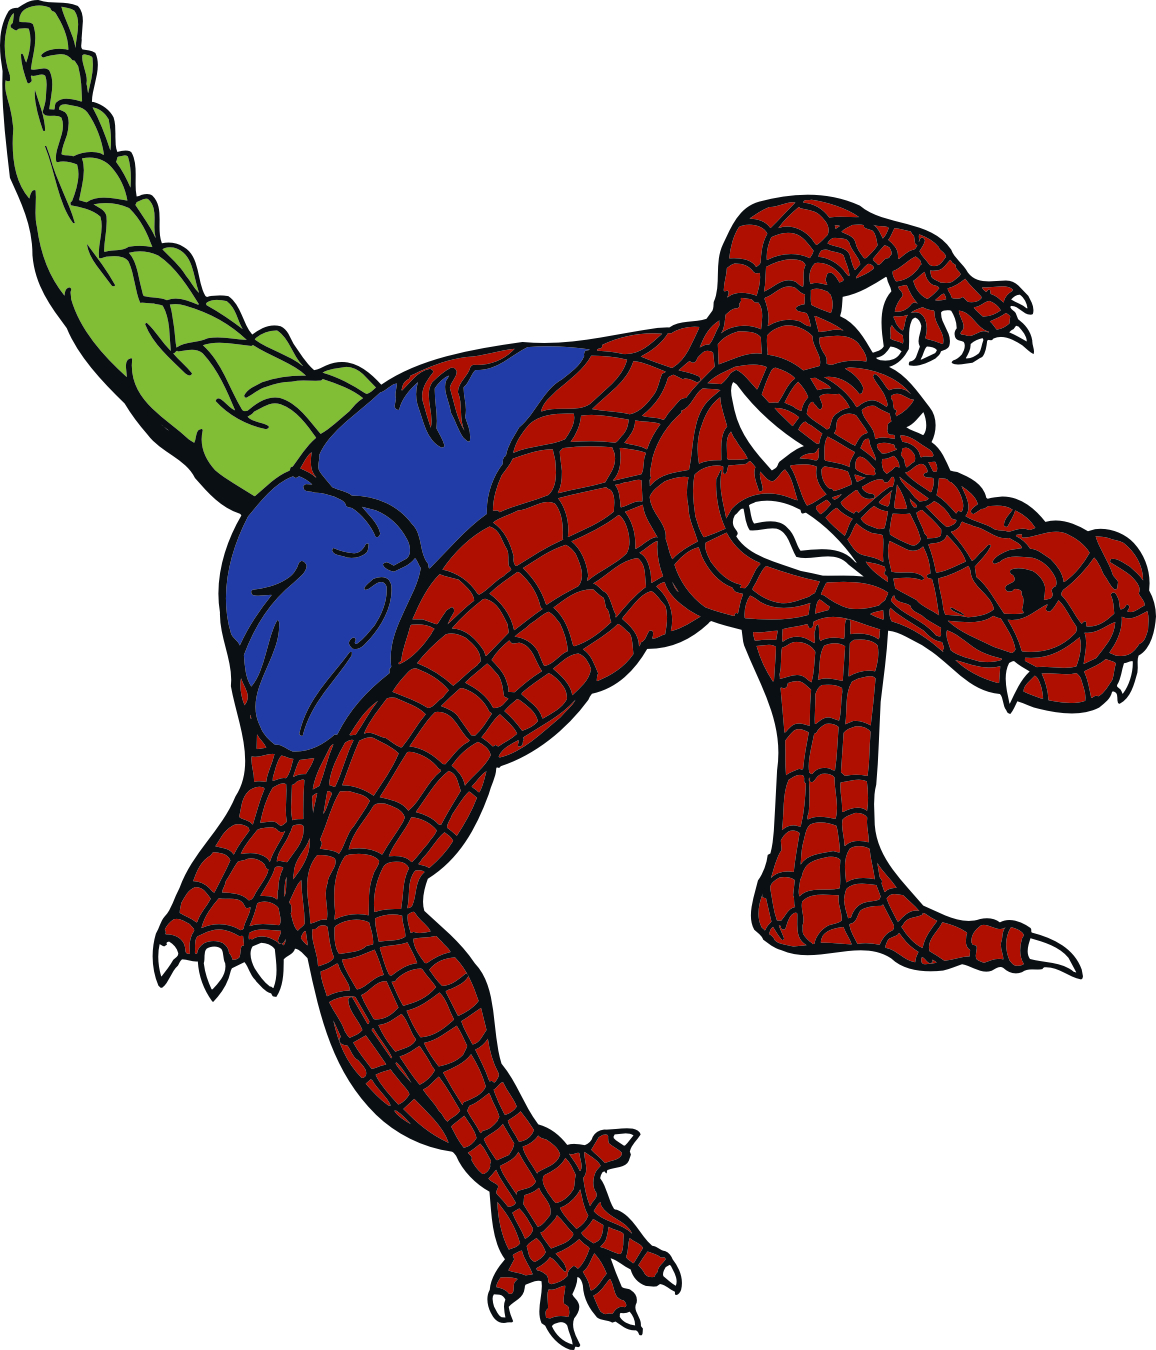 Gator_Spiderman.jpg